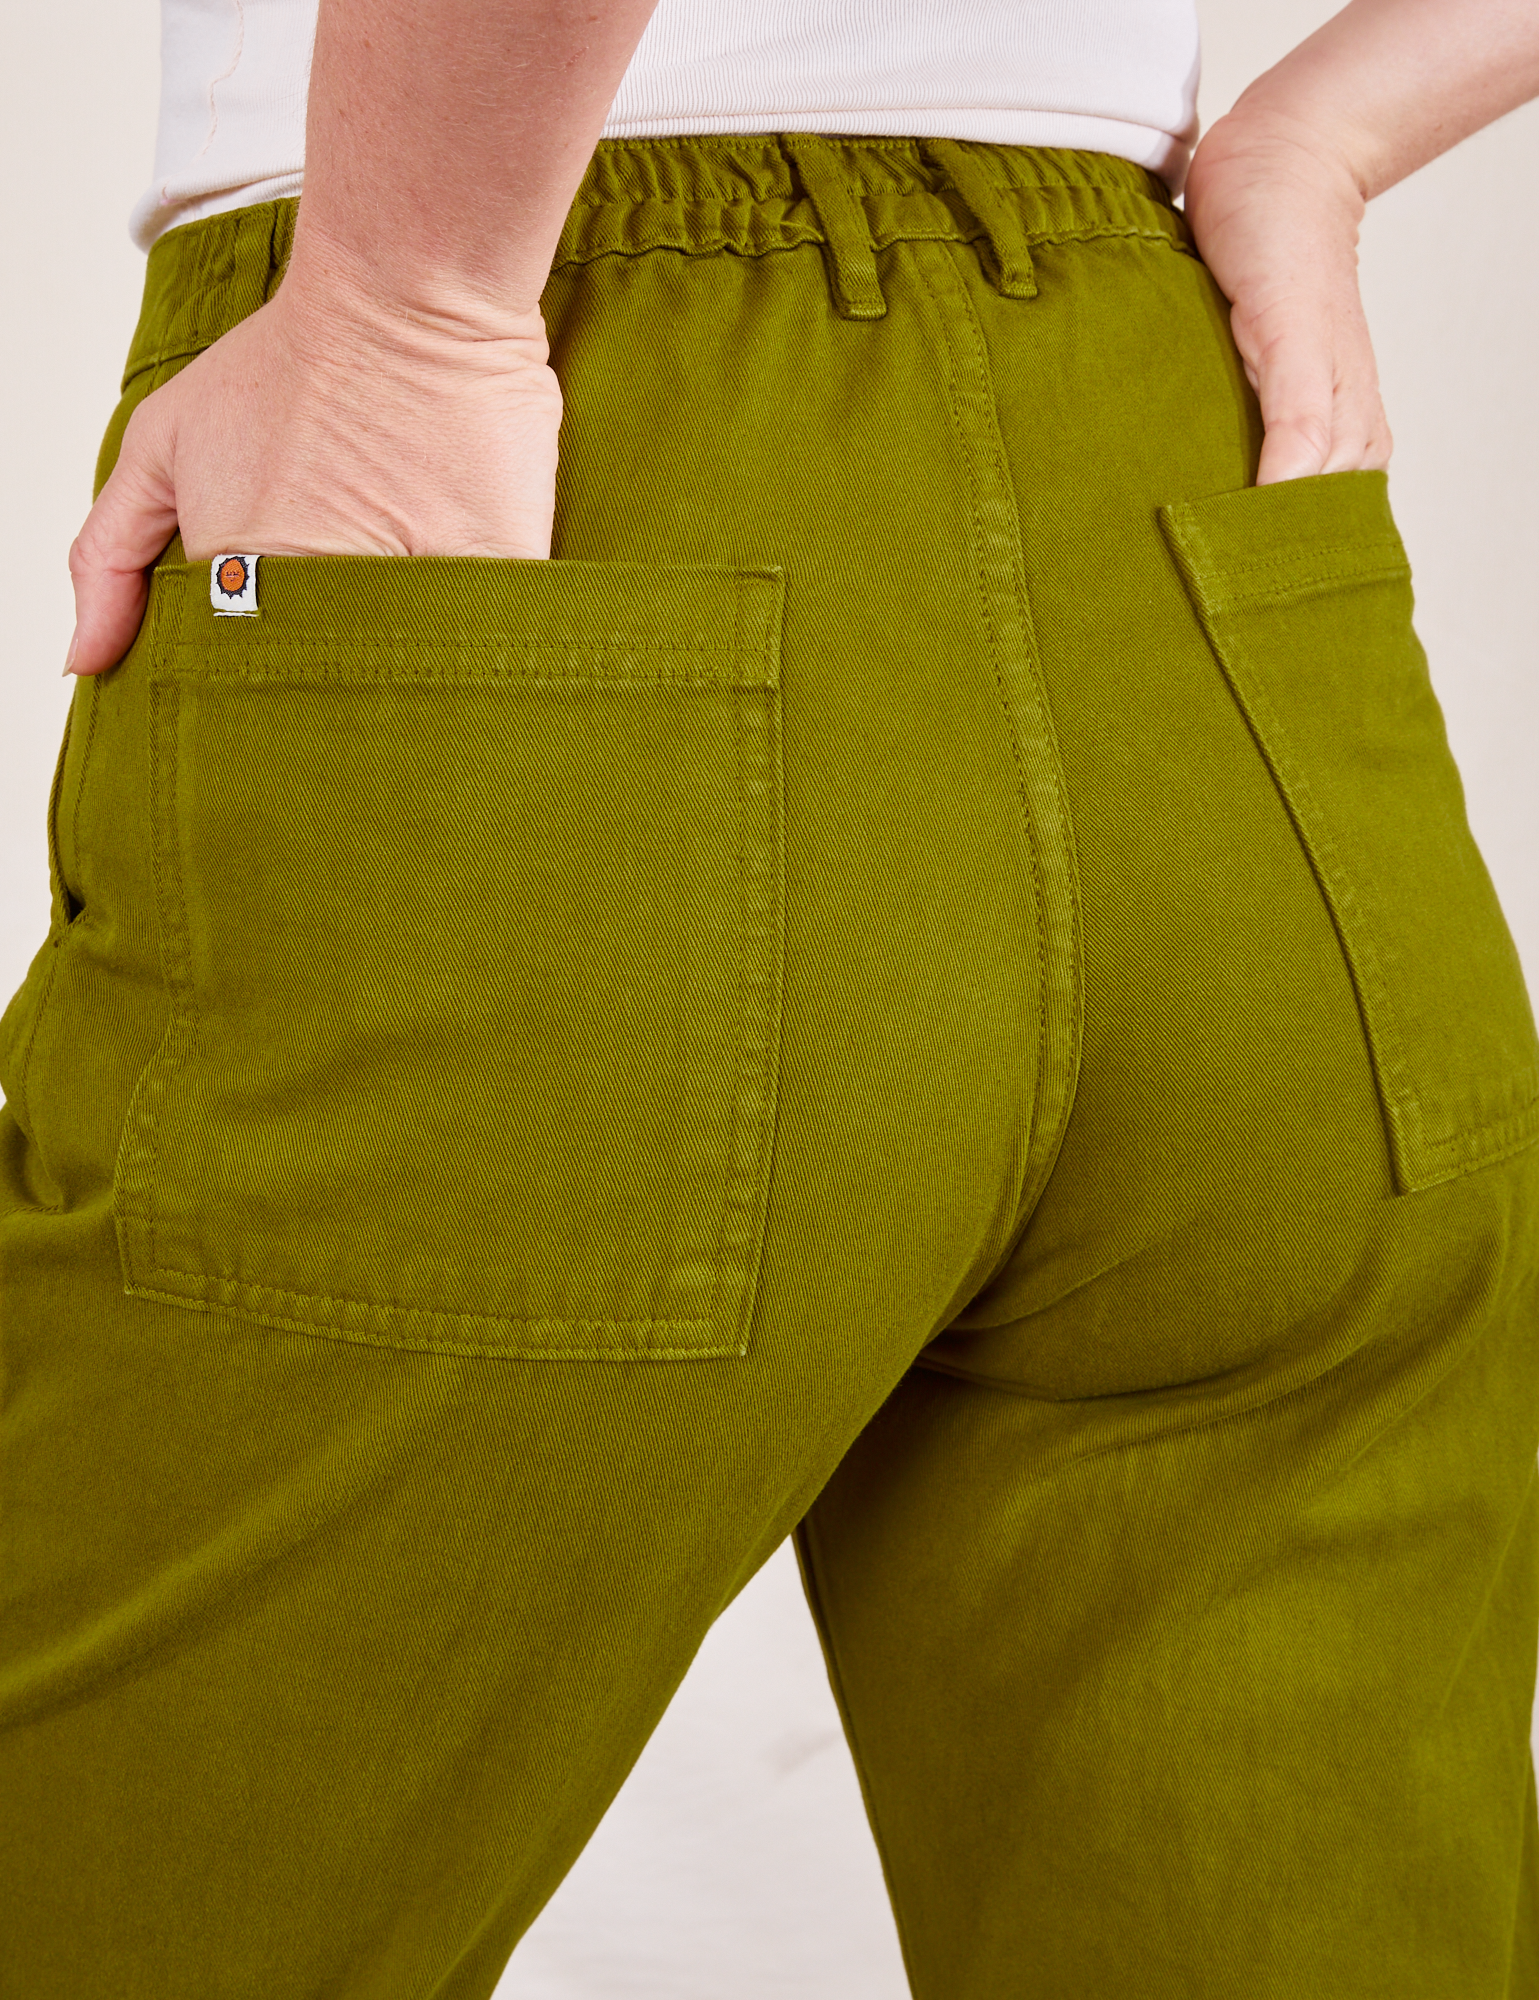 Work Pants in Olive Green back close up on Allison